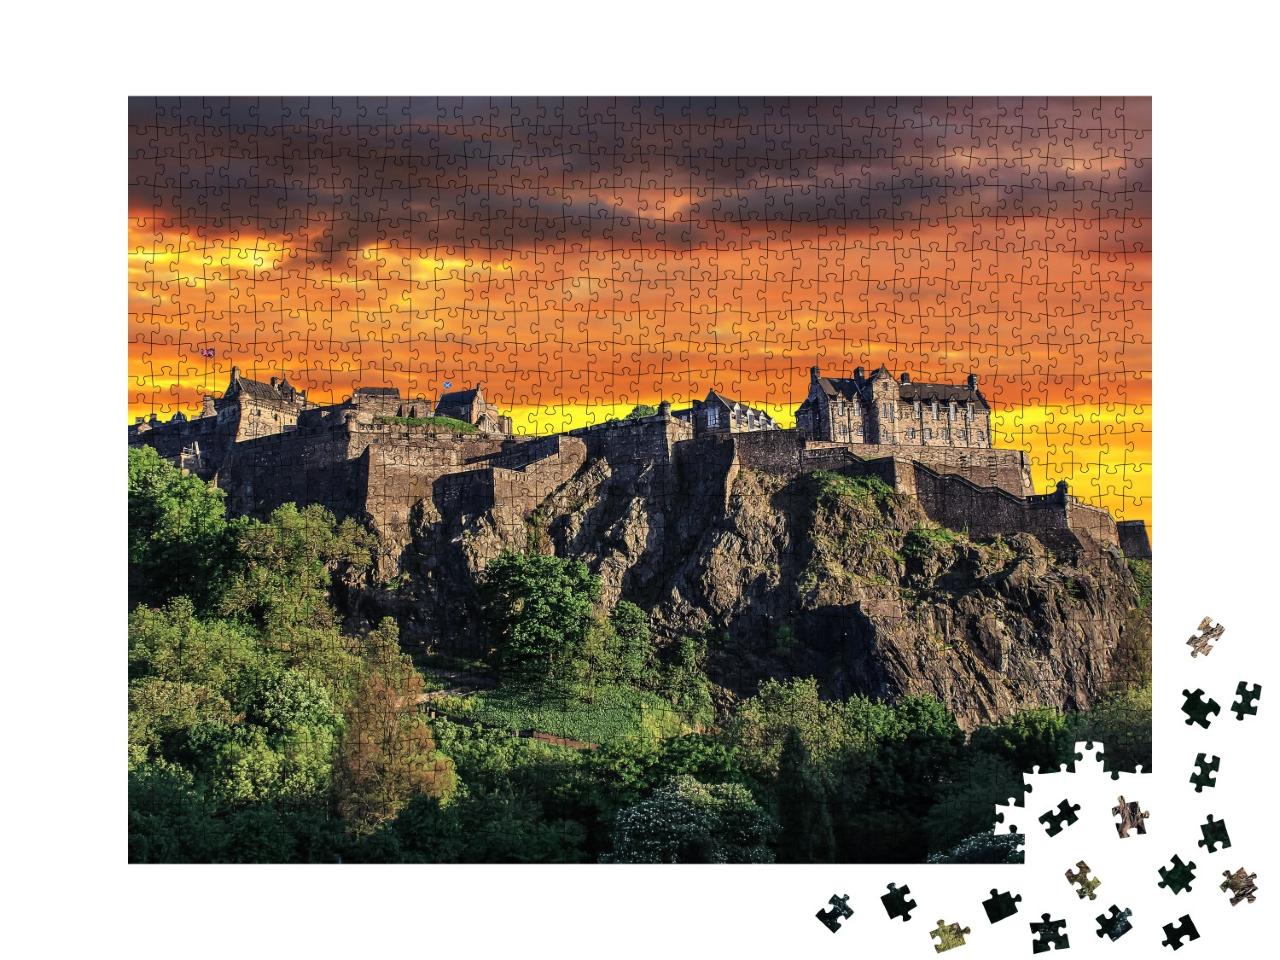 Puzzle 1000 Teile „Spektakulärer Sonnenuntergang am Hügel des Edinburgh Castle, Schottland“